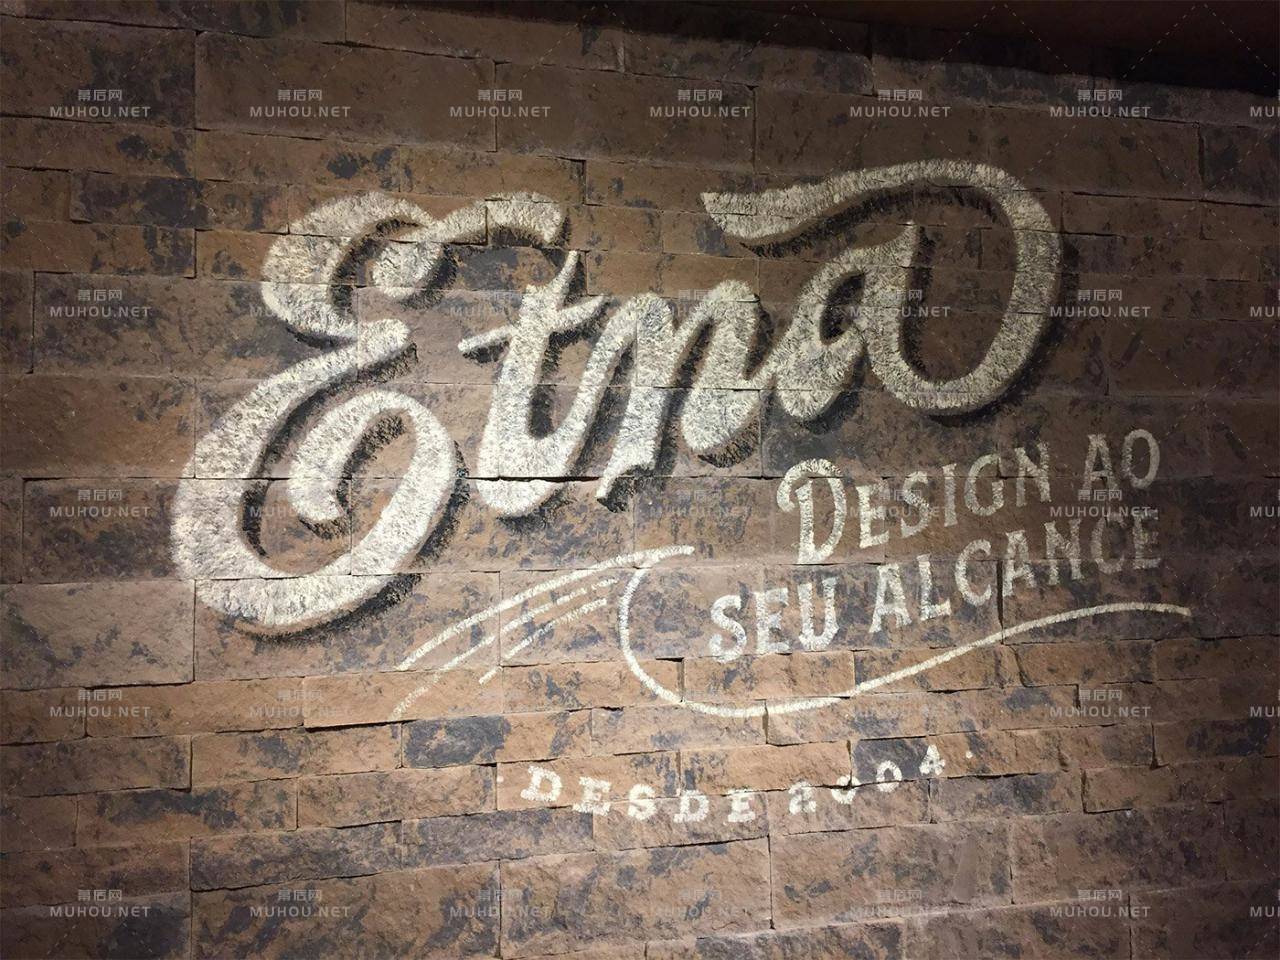 Estúdio Itálico店面创意手绘艺术文字设计作品